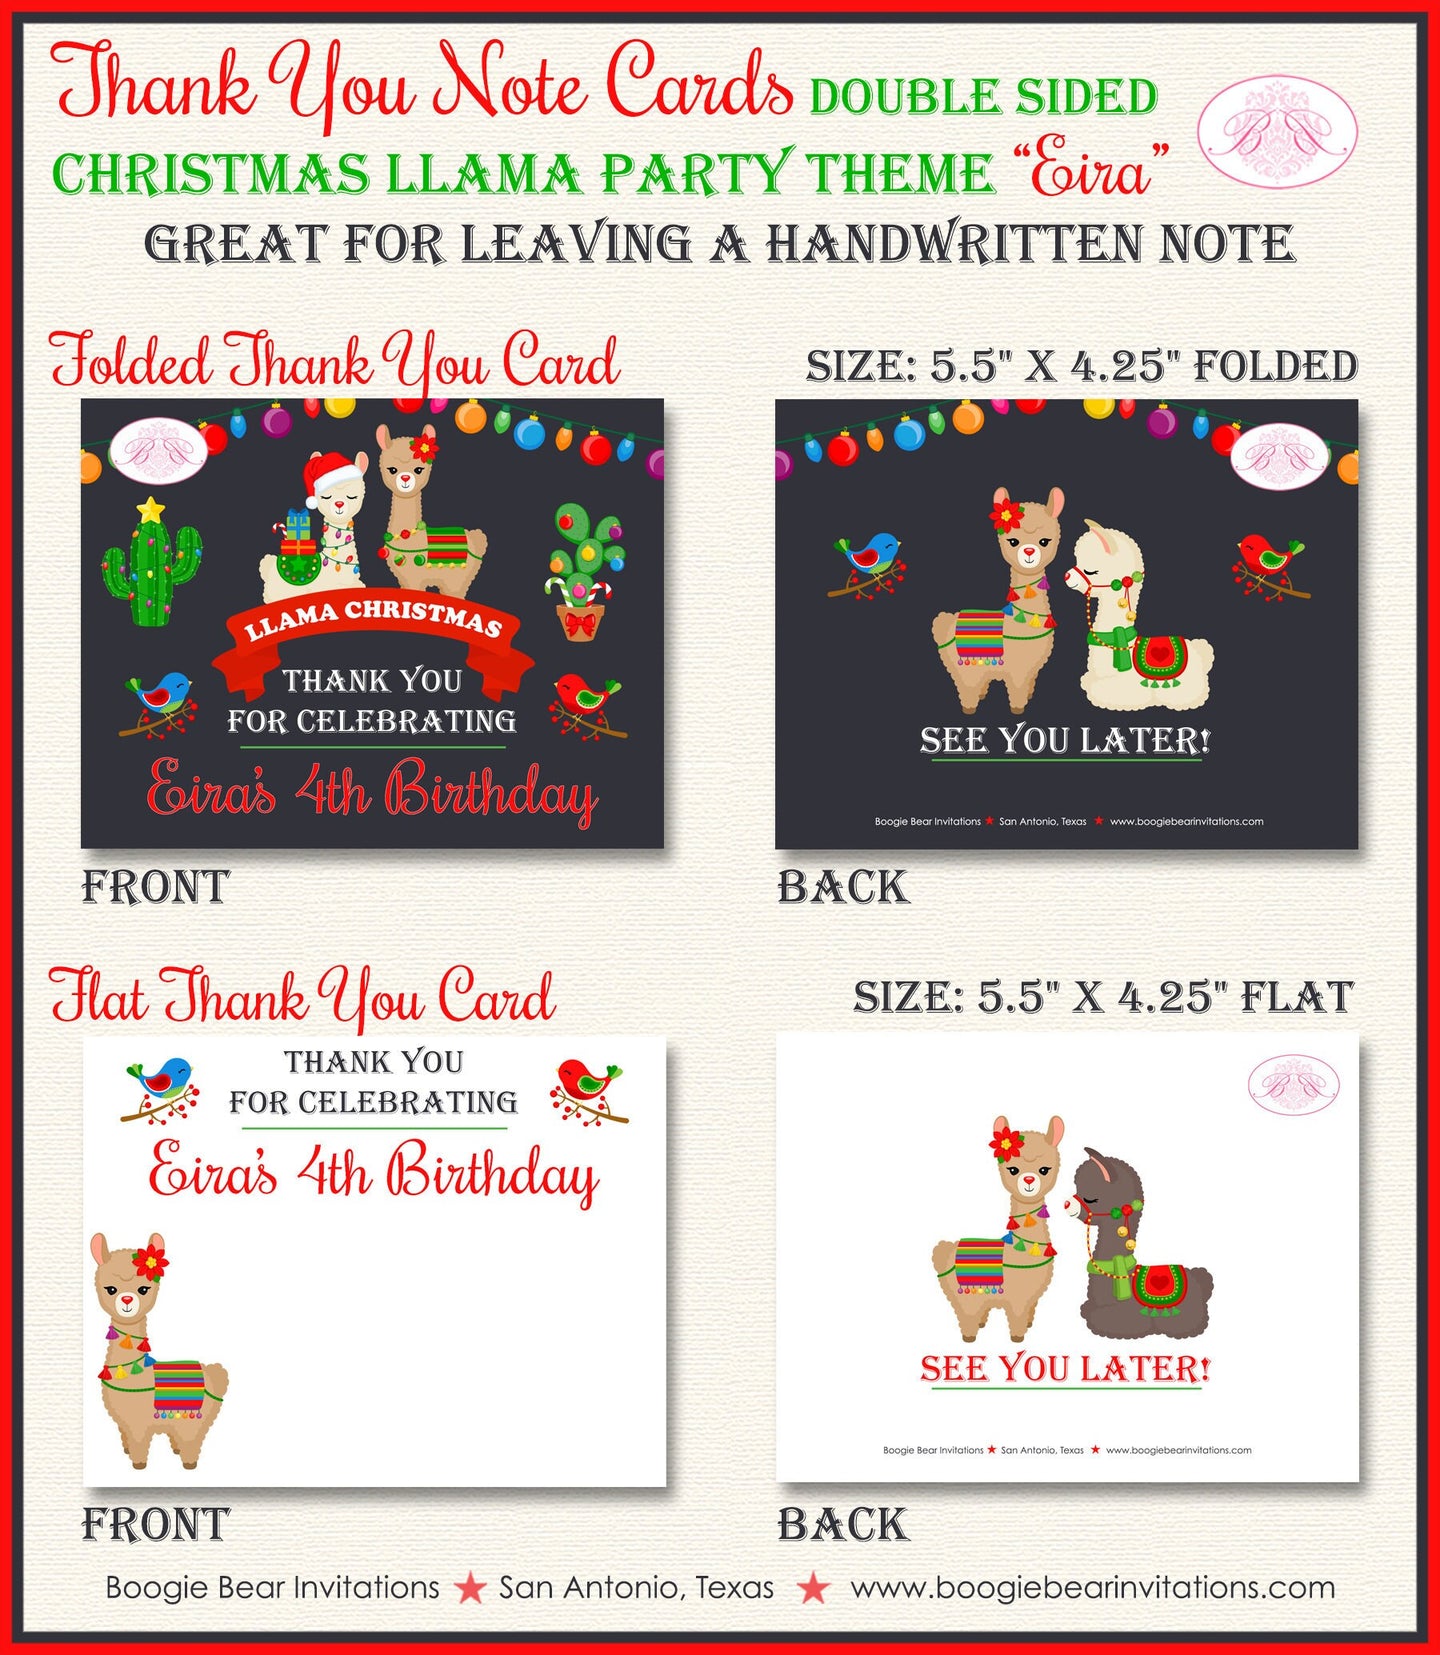 Christmas Llama Birthday Party Thank You Card Note Girl Boy Alpaca Birds Cactus Winter Chalkboard Boogie Bear Invitations Eira Theme Printed